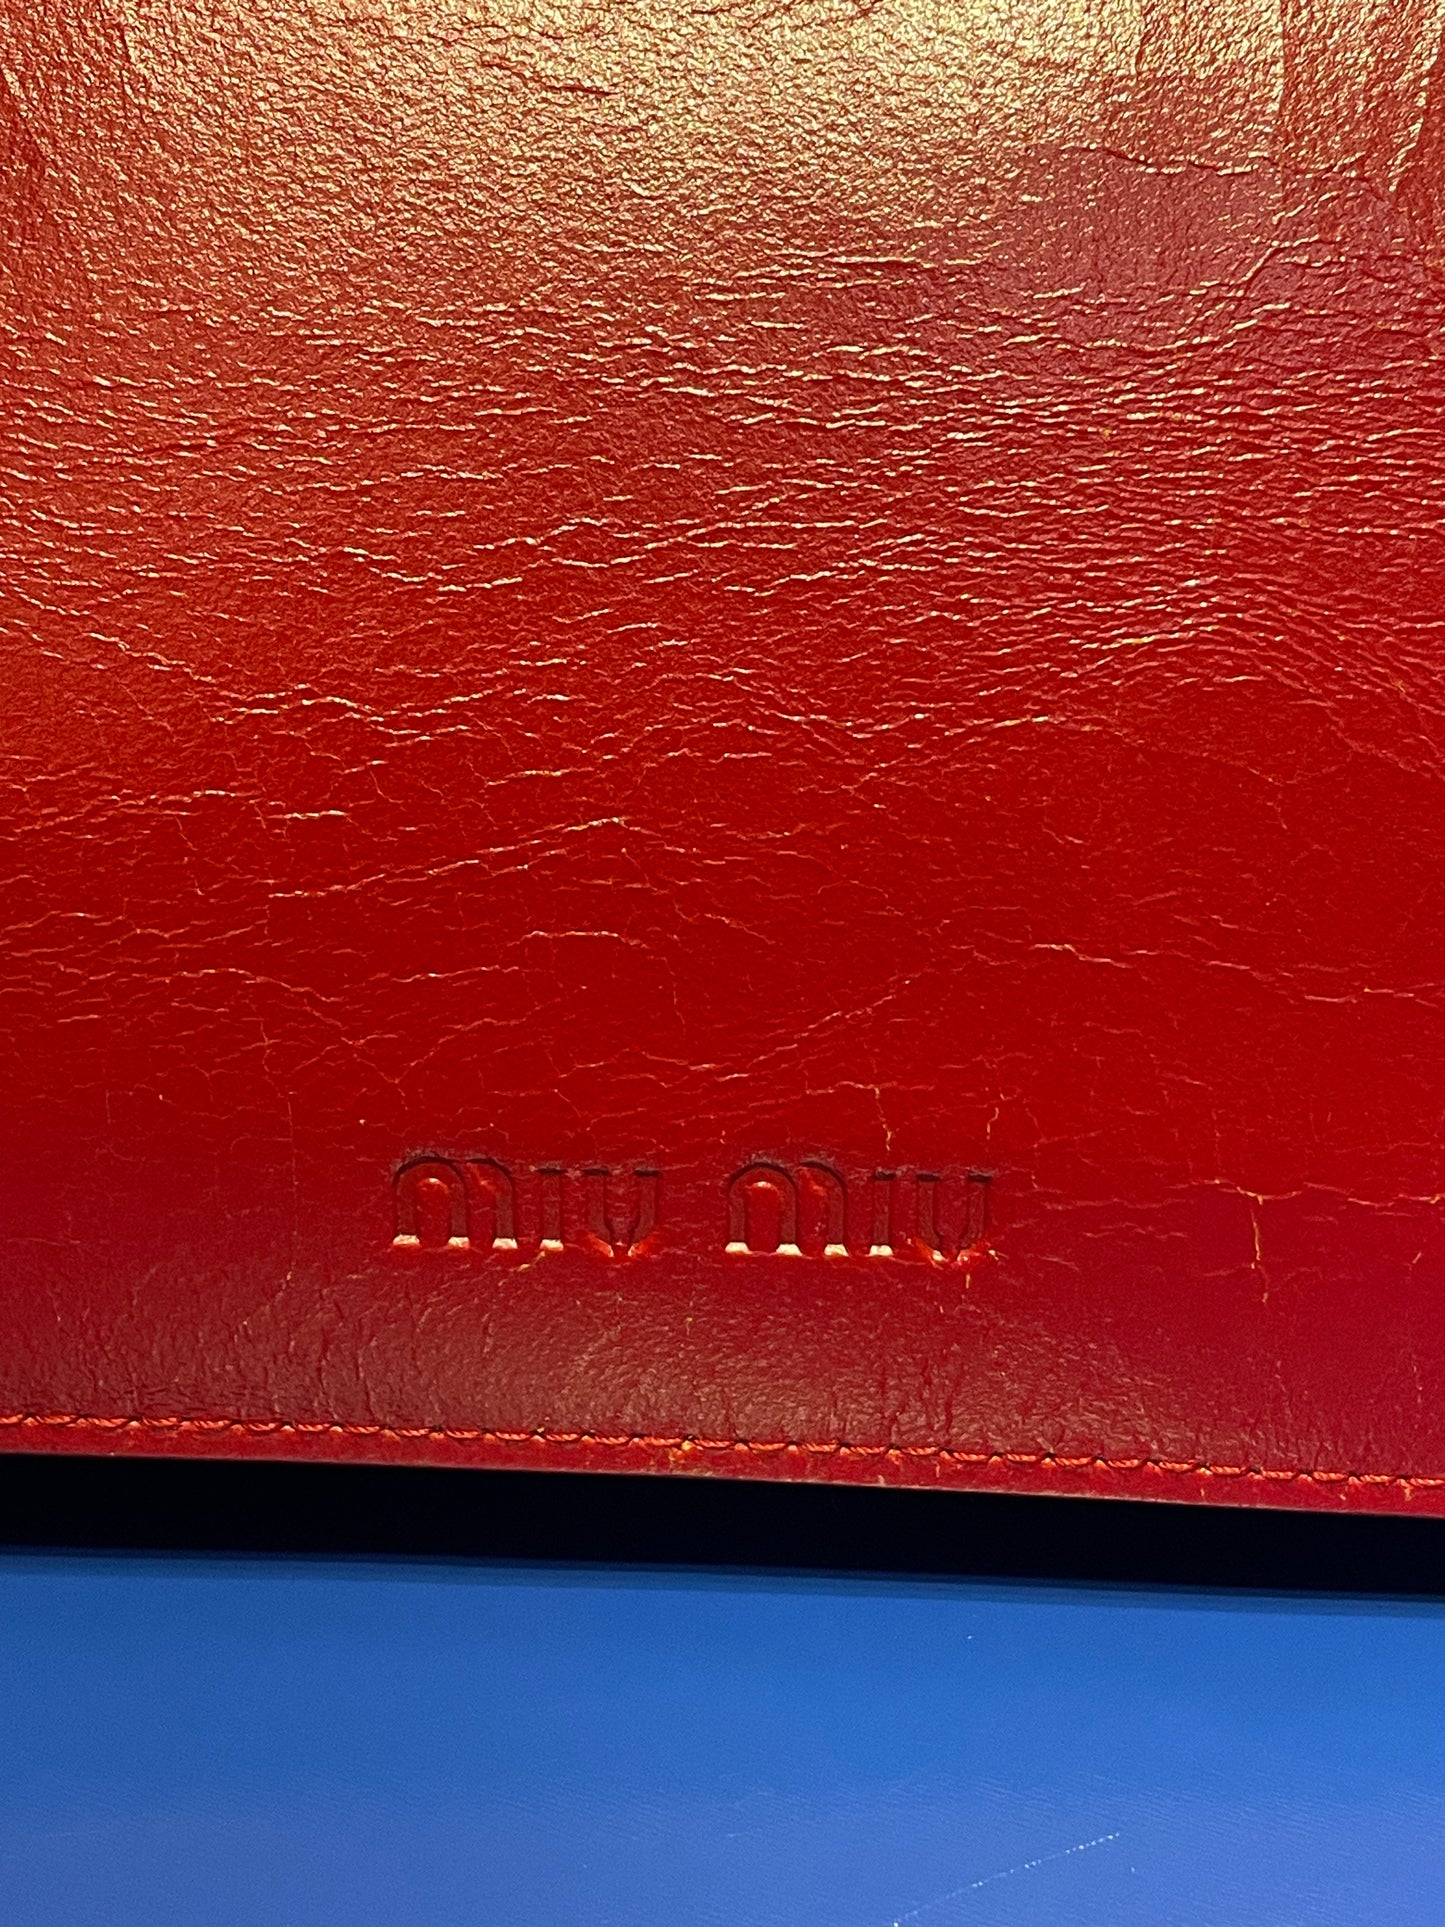 Miu Miu F/W 2001 Red Cracked Leather Bag